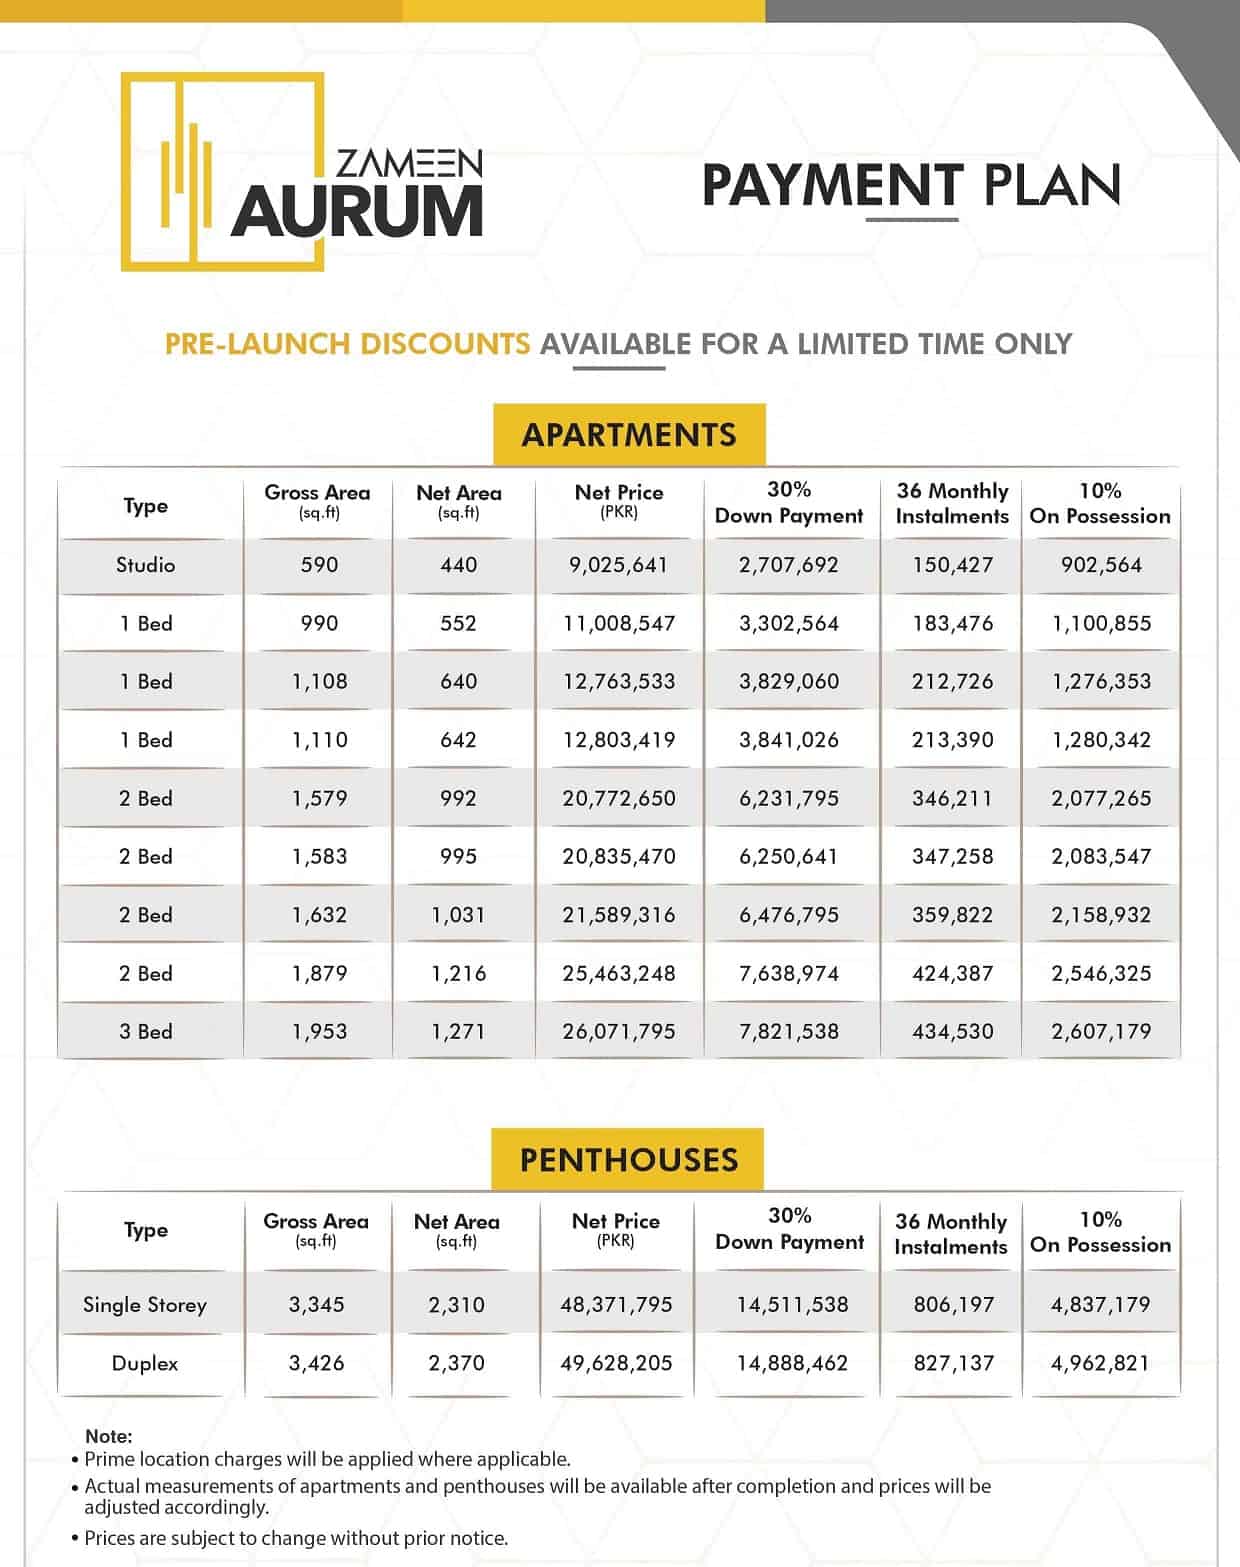 Aurum Payment Plan